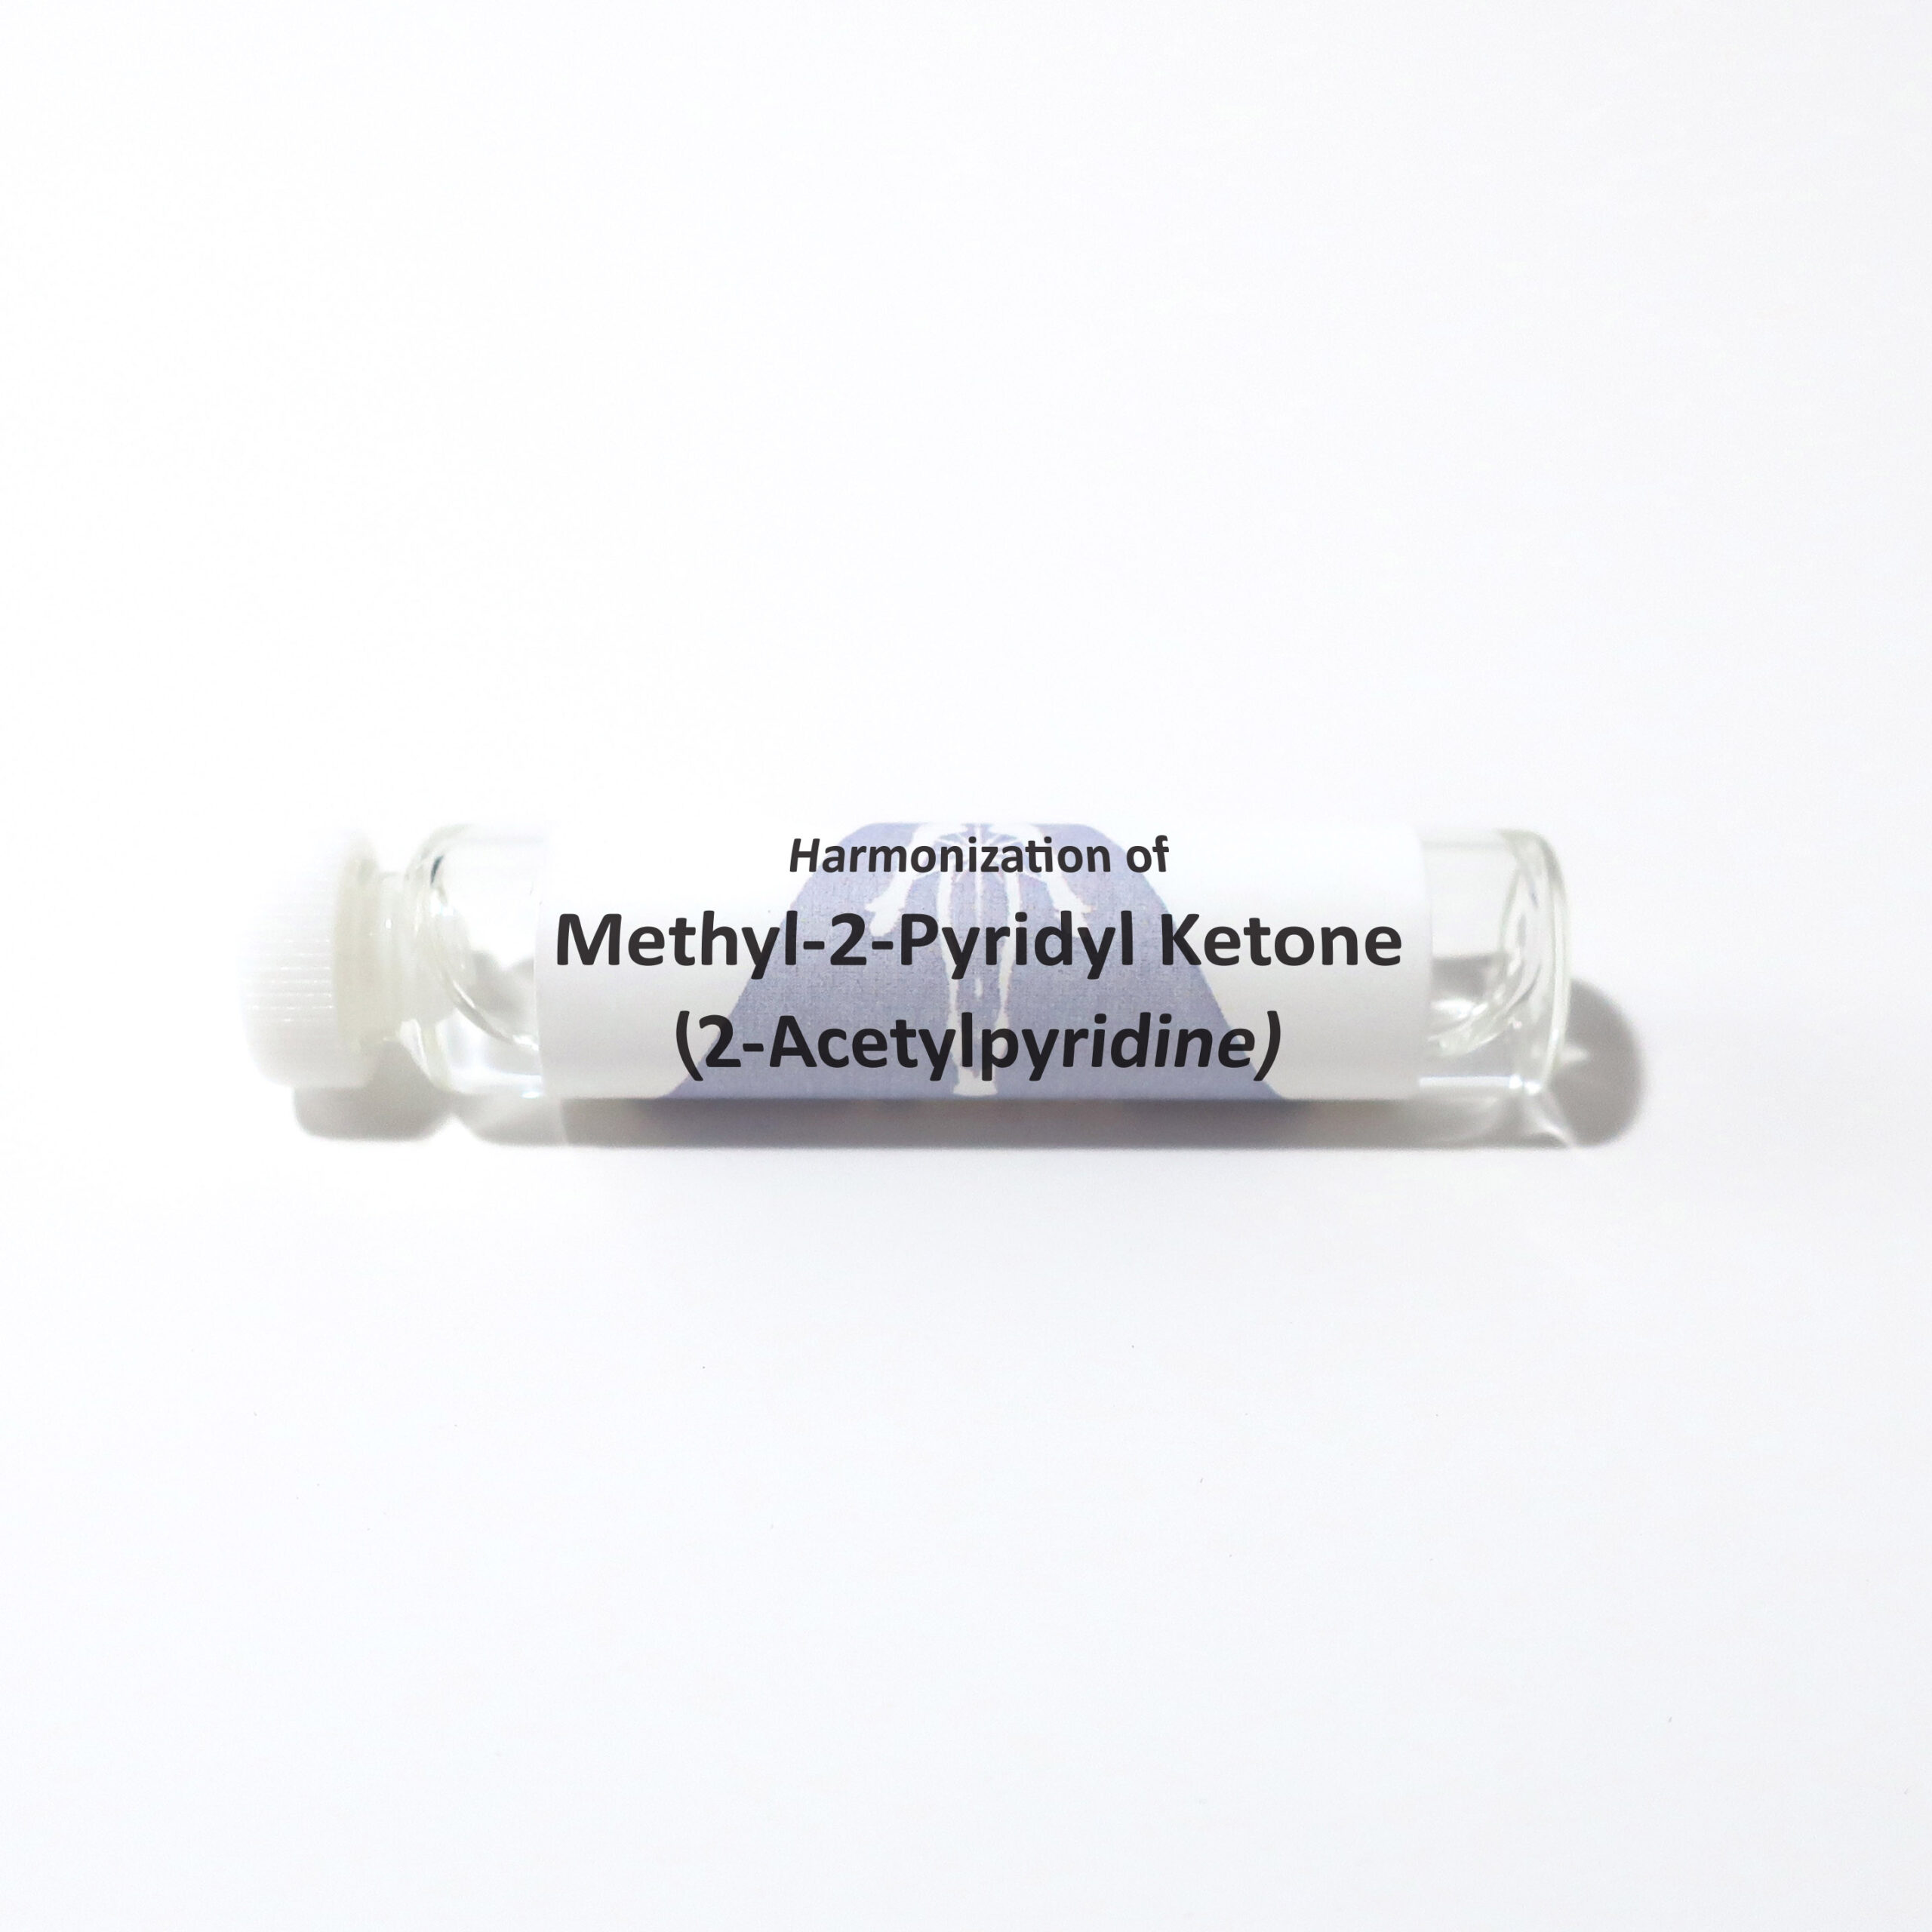 Methyl-2-Pyridyl Ketone (2-Acetylpyridine)